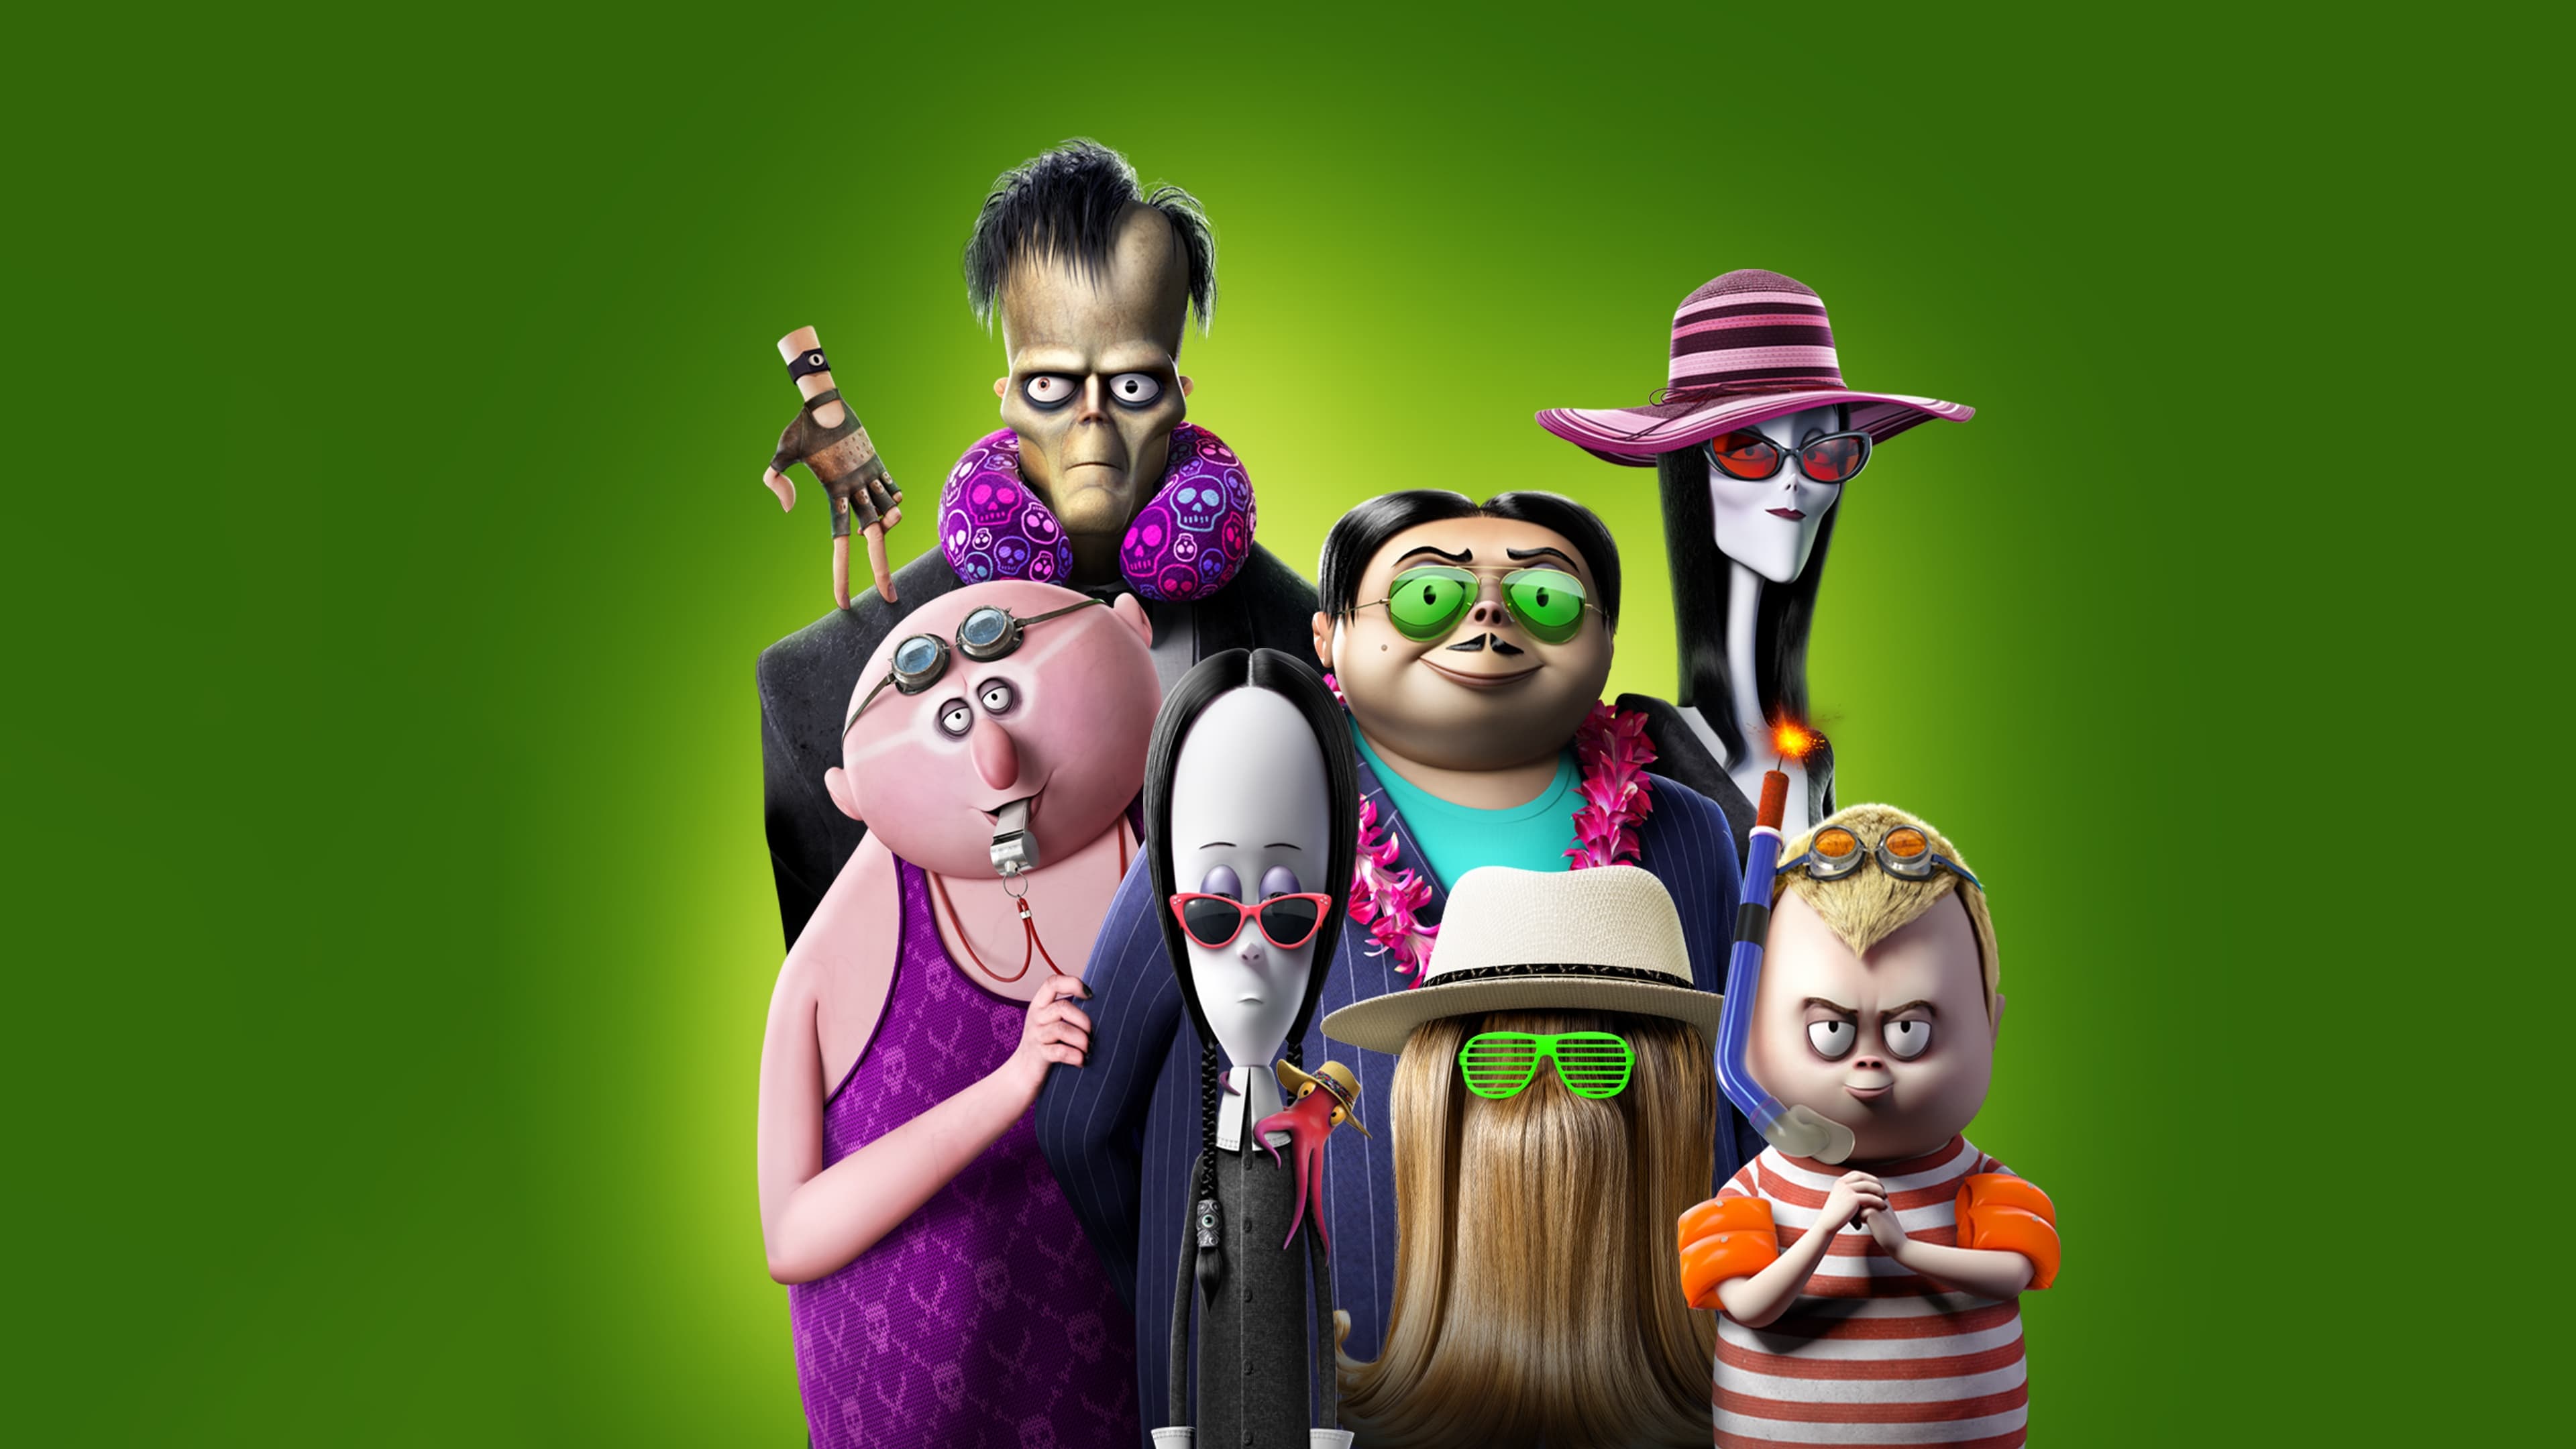 Familjen Addams 2